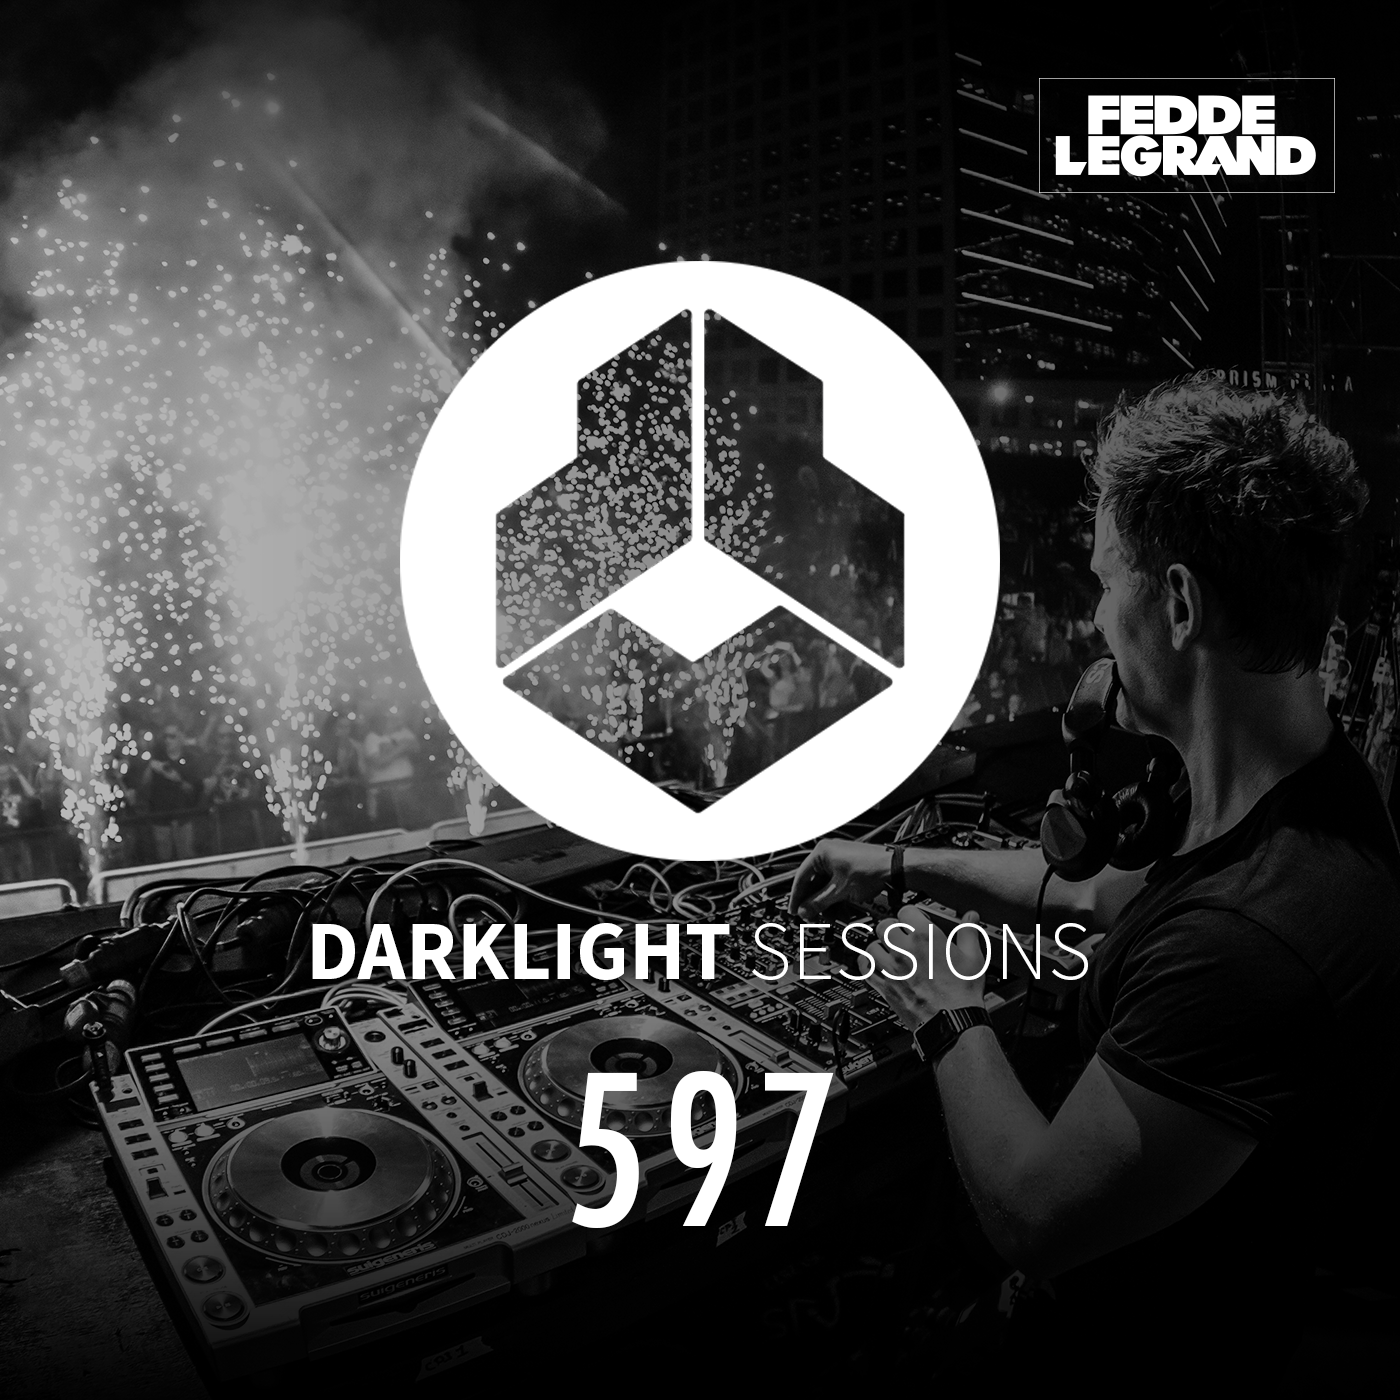 Darklight Sessions 597